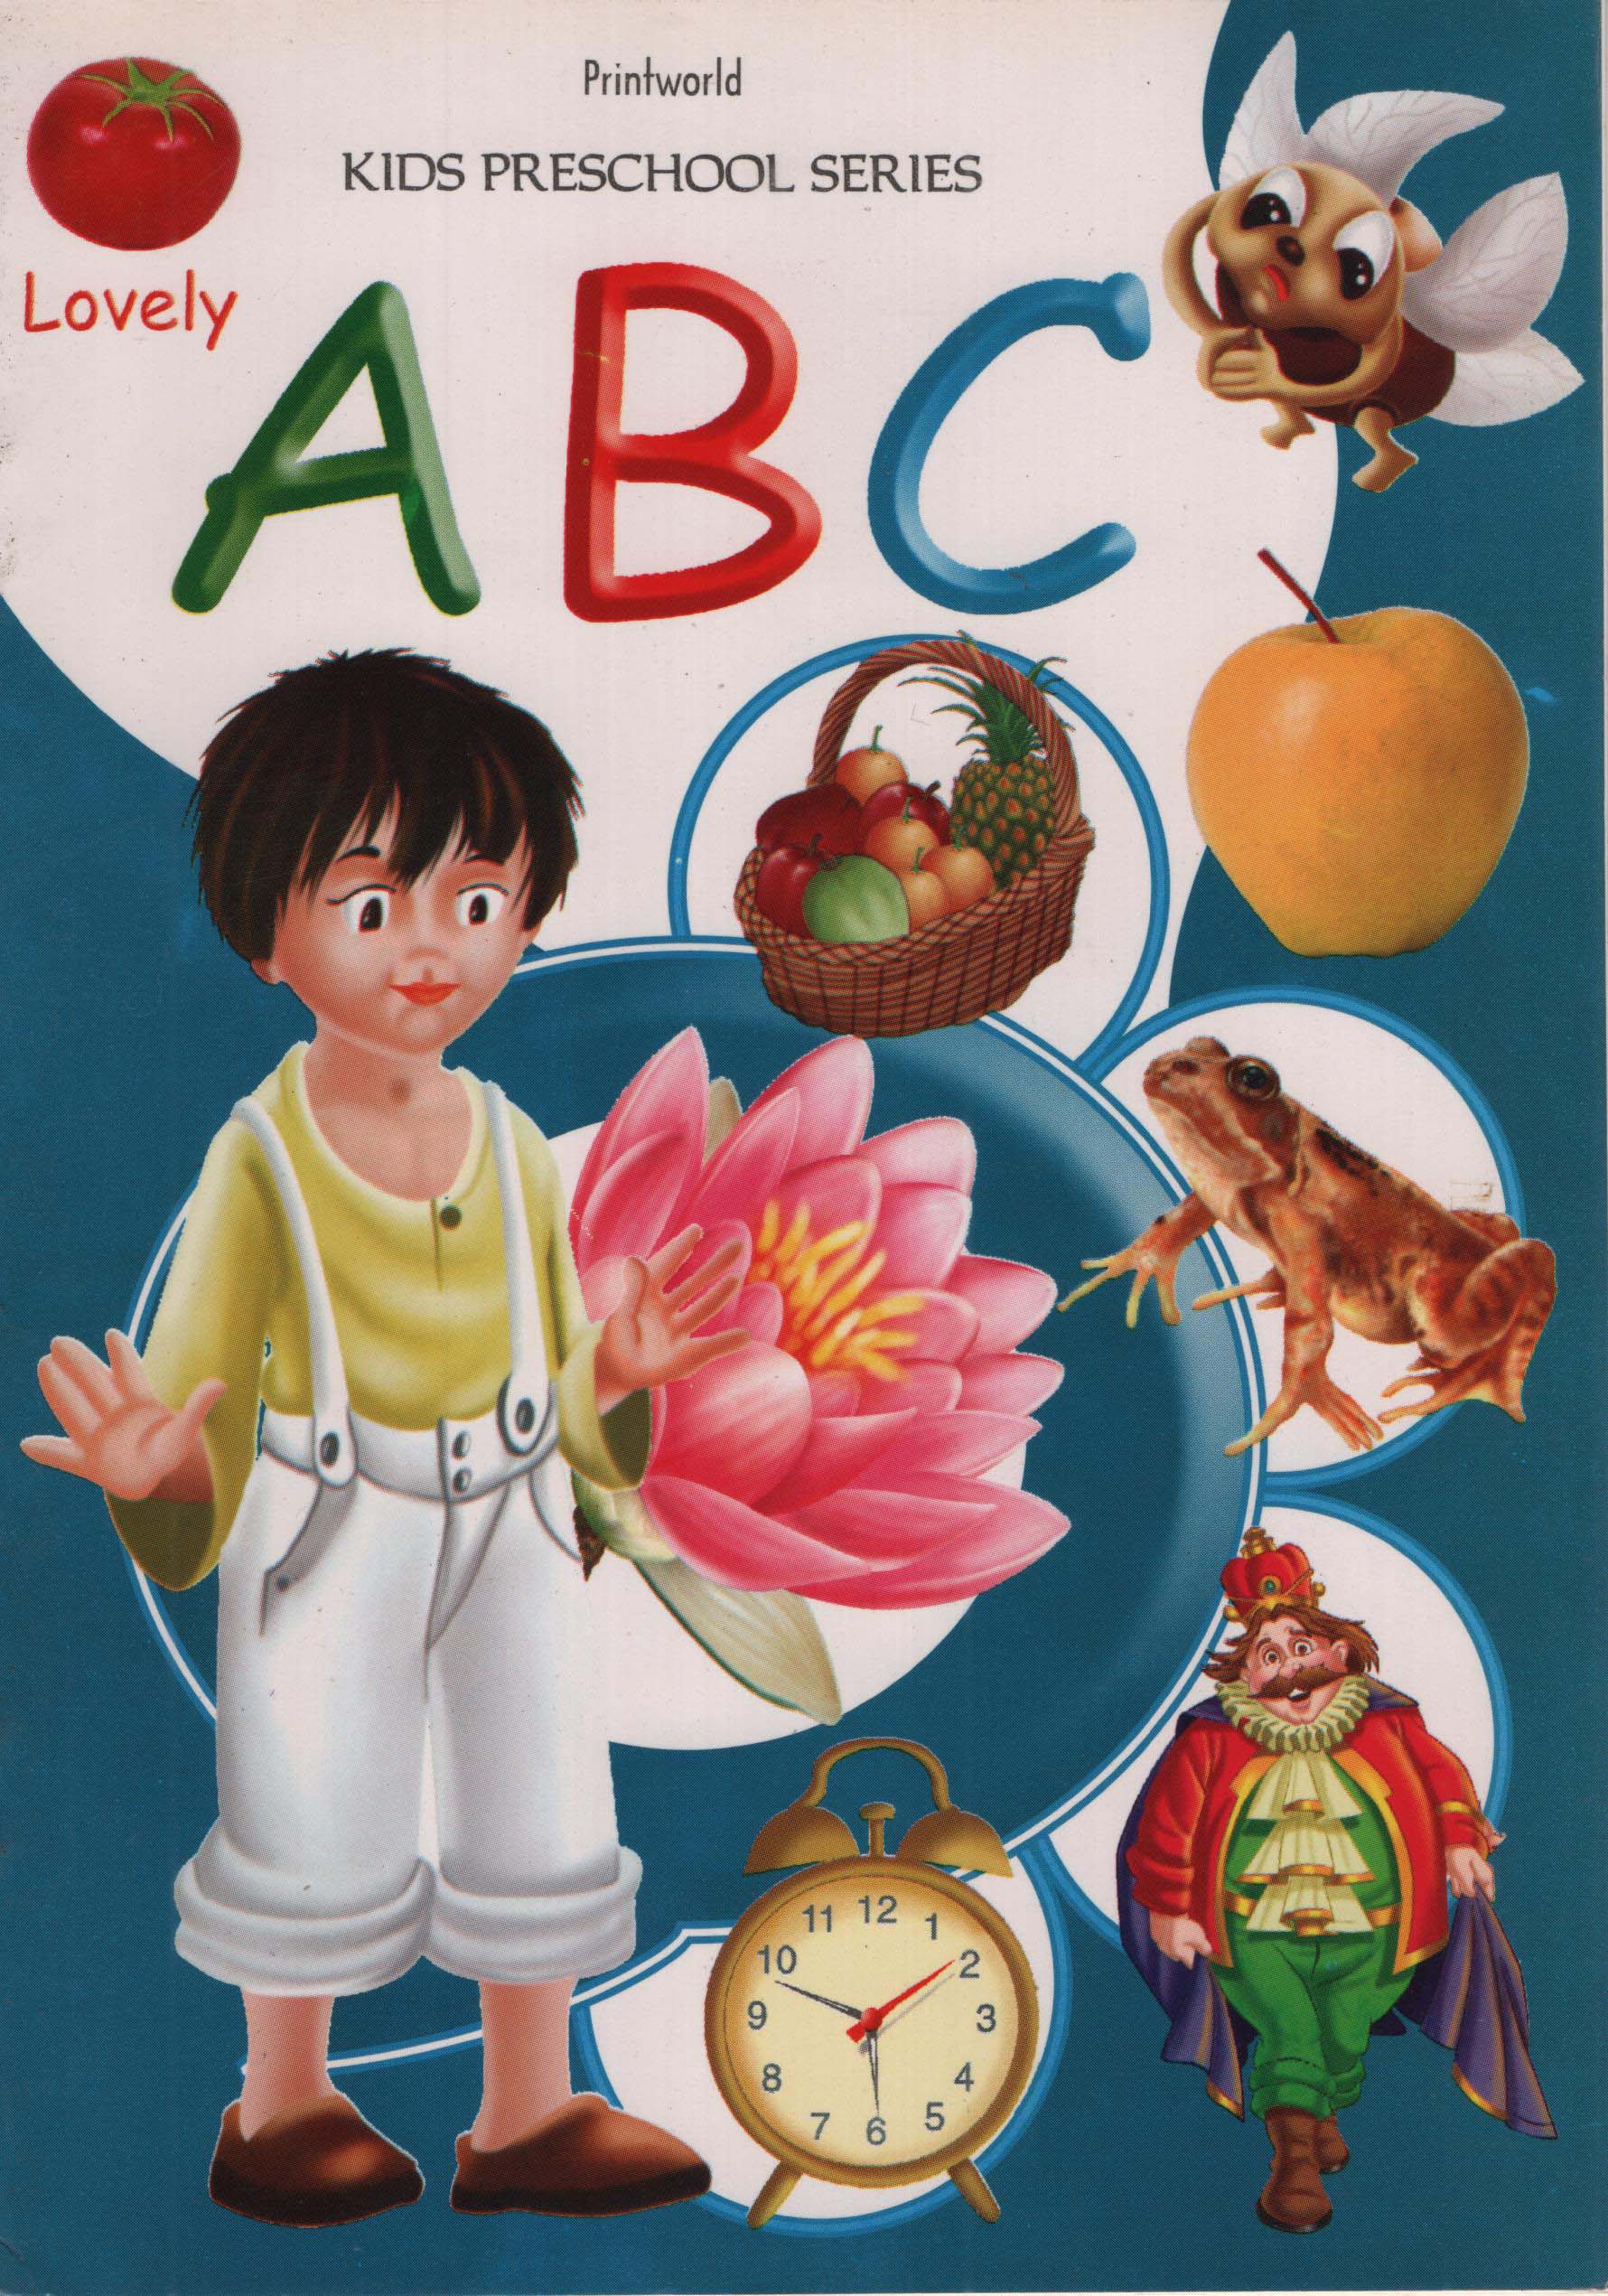 Printworld Kids Preschool Series : A B C